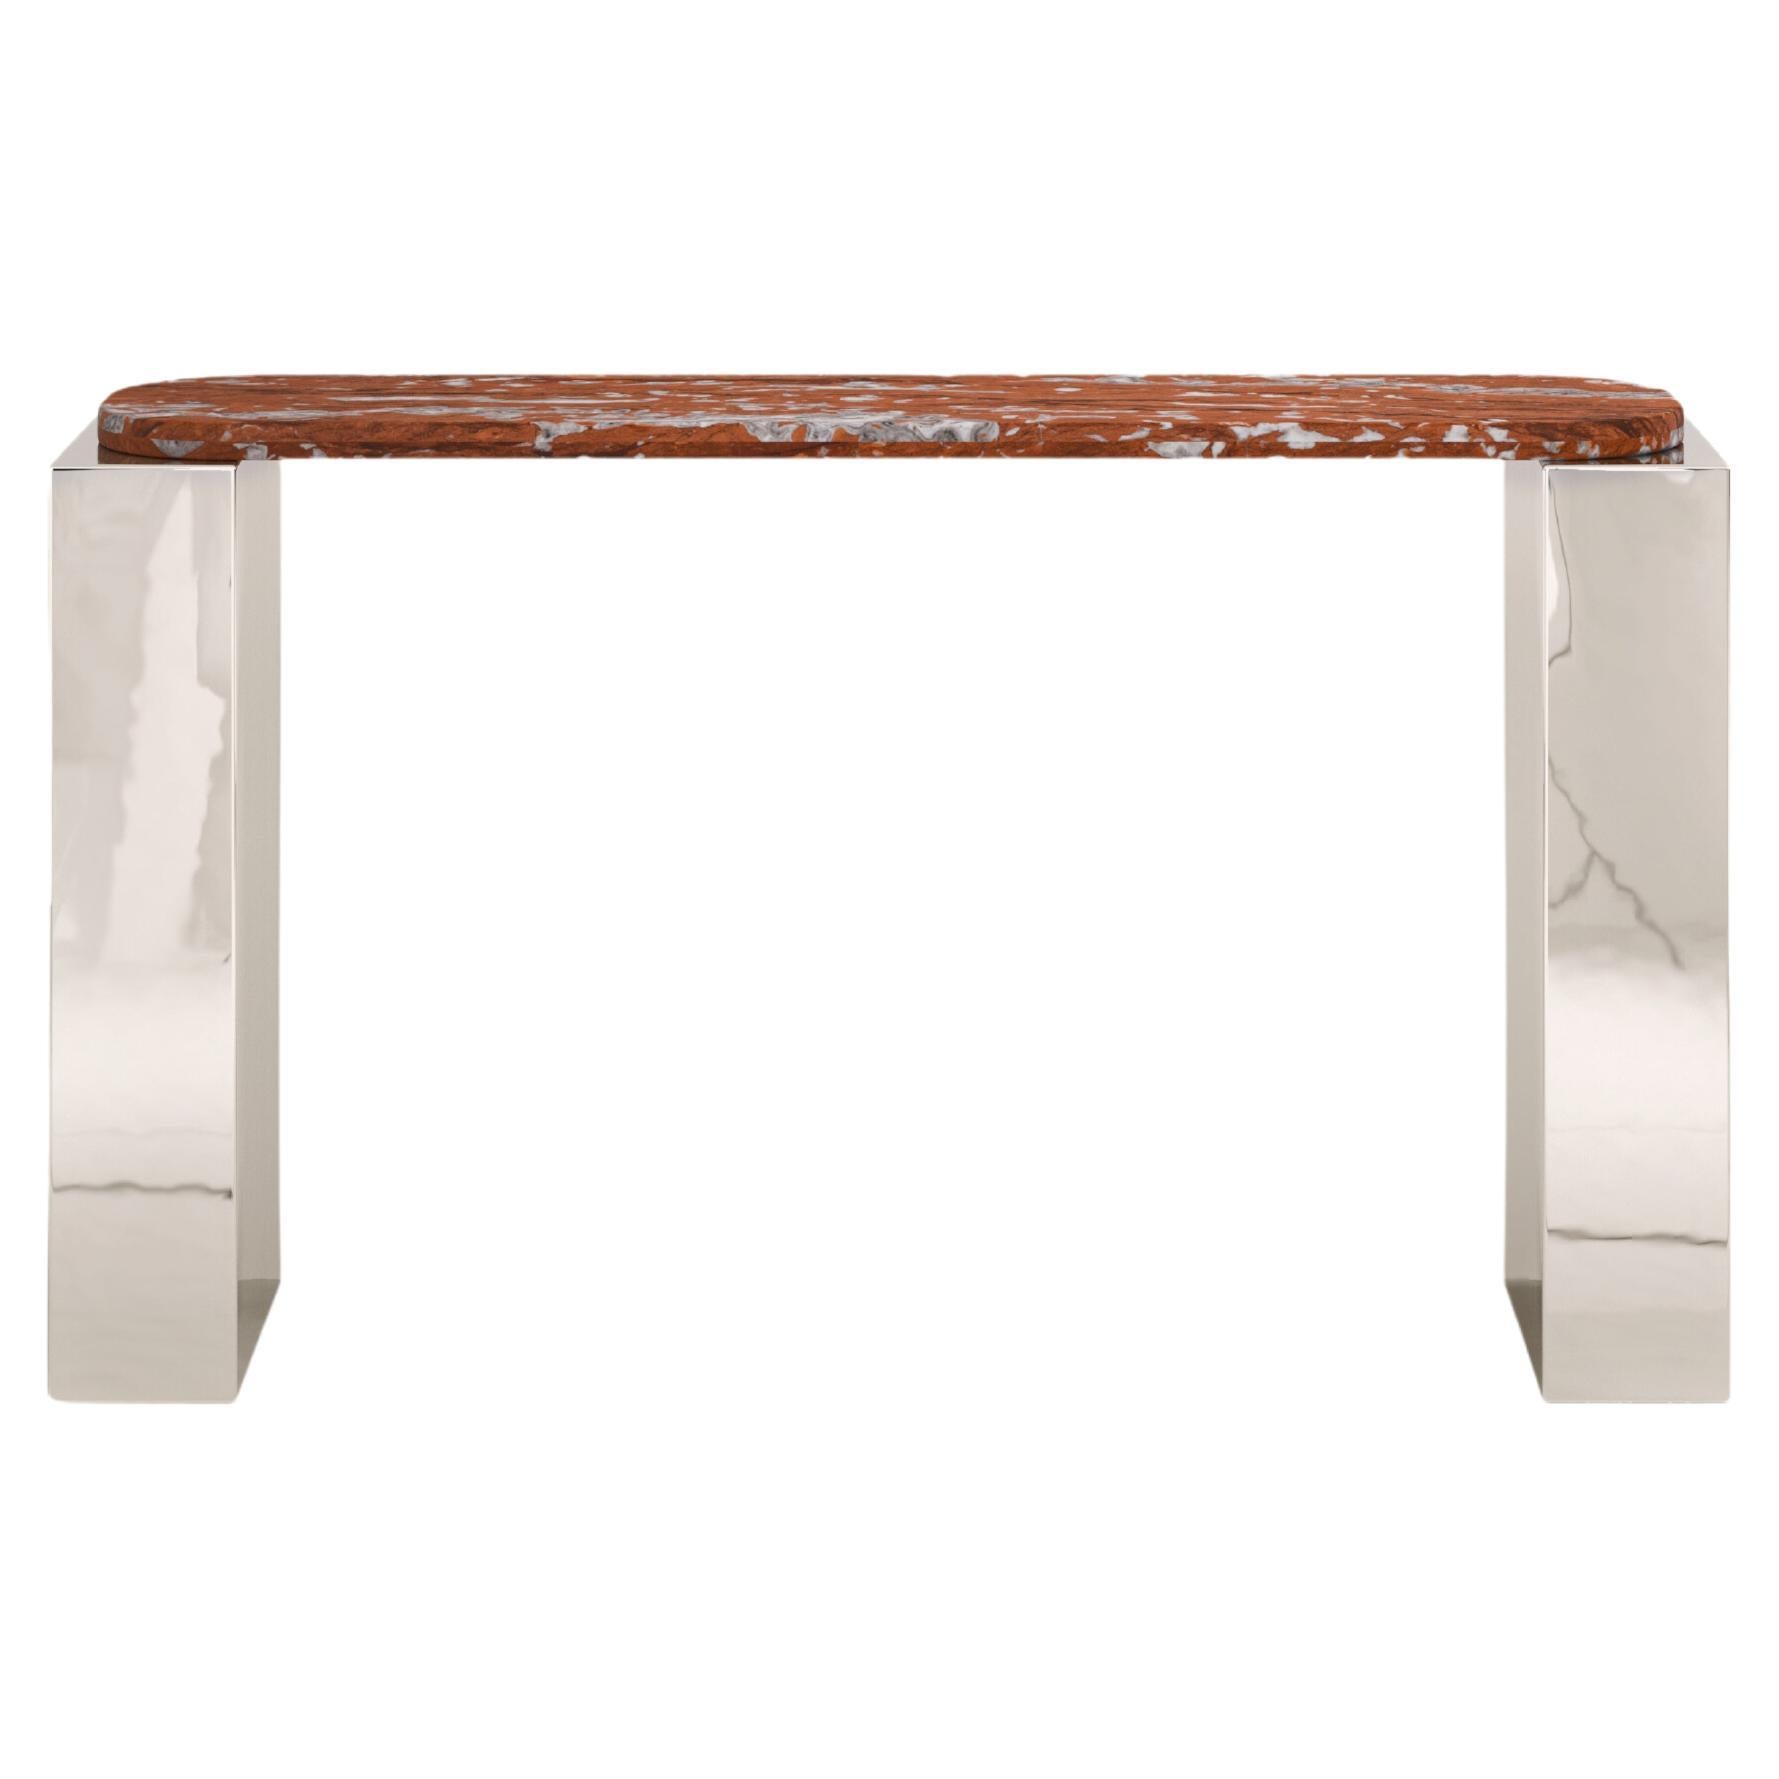 FORM(LA) Cubo Console Table 62”L x 17”W x 36”H Rosso Francia Marble & Chrome